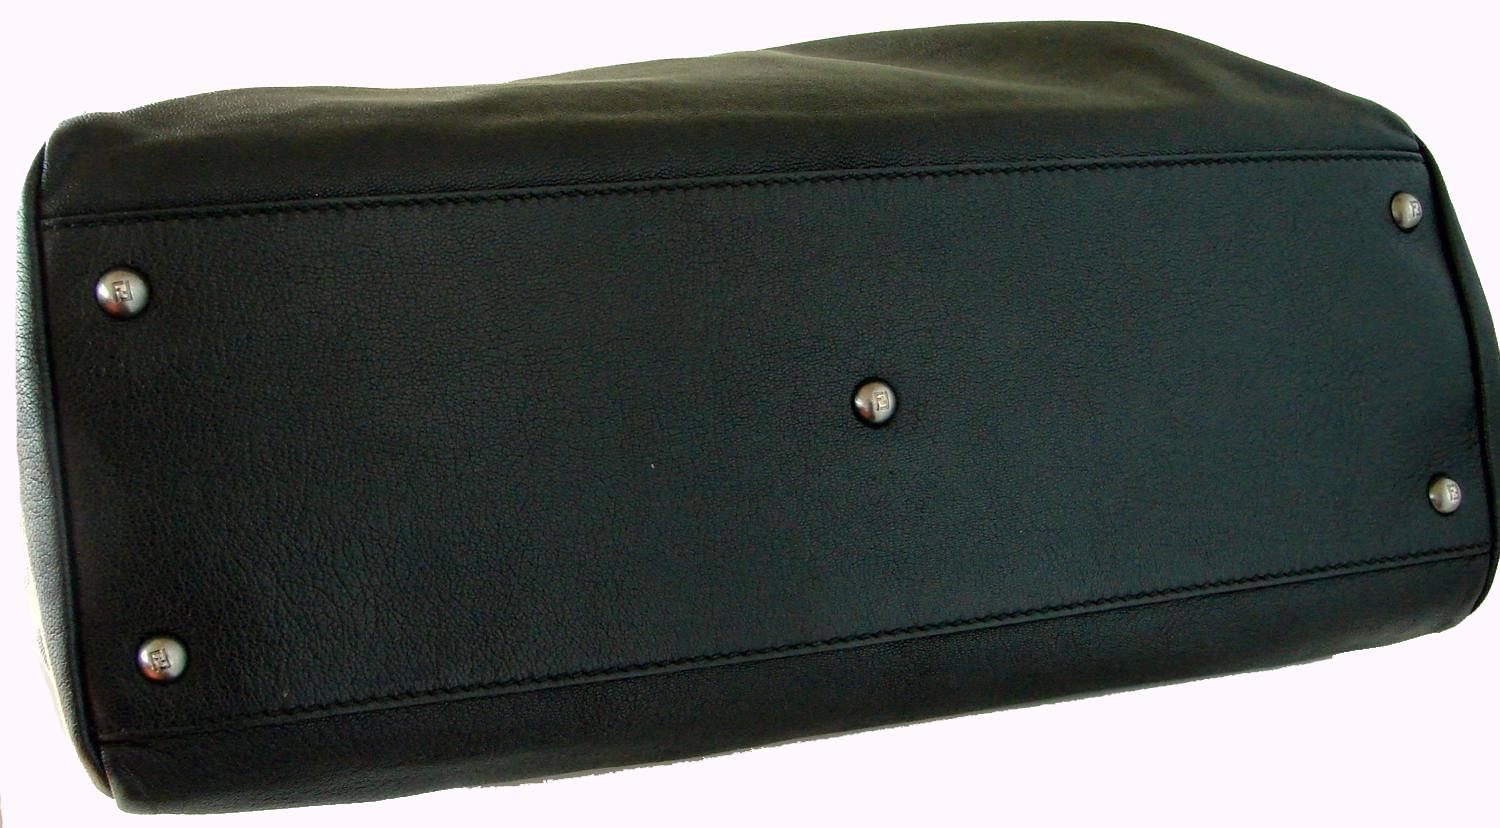 Iconic Fendi Large Black Leather Peekaboo Bag Tote Satchel with Zucca Lining 1